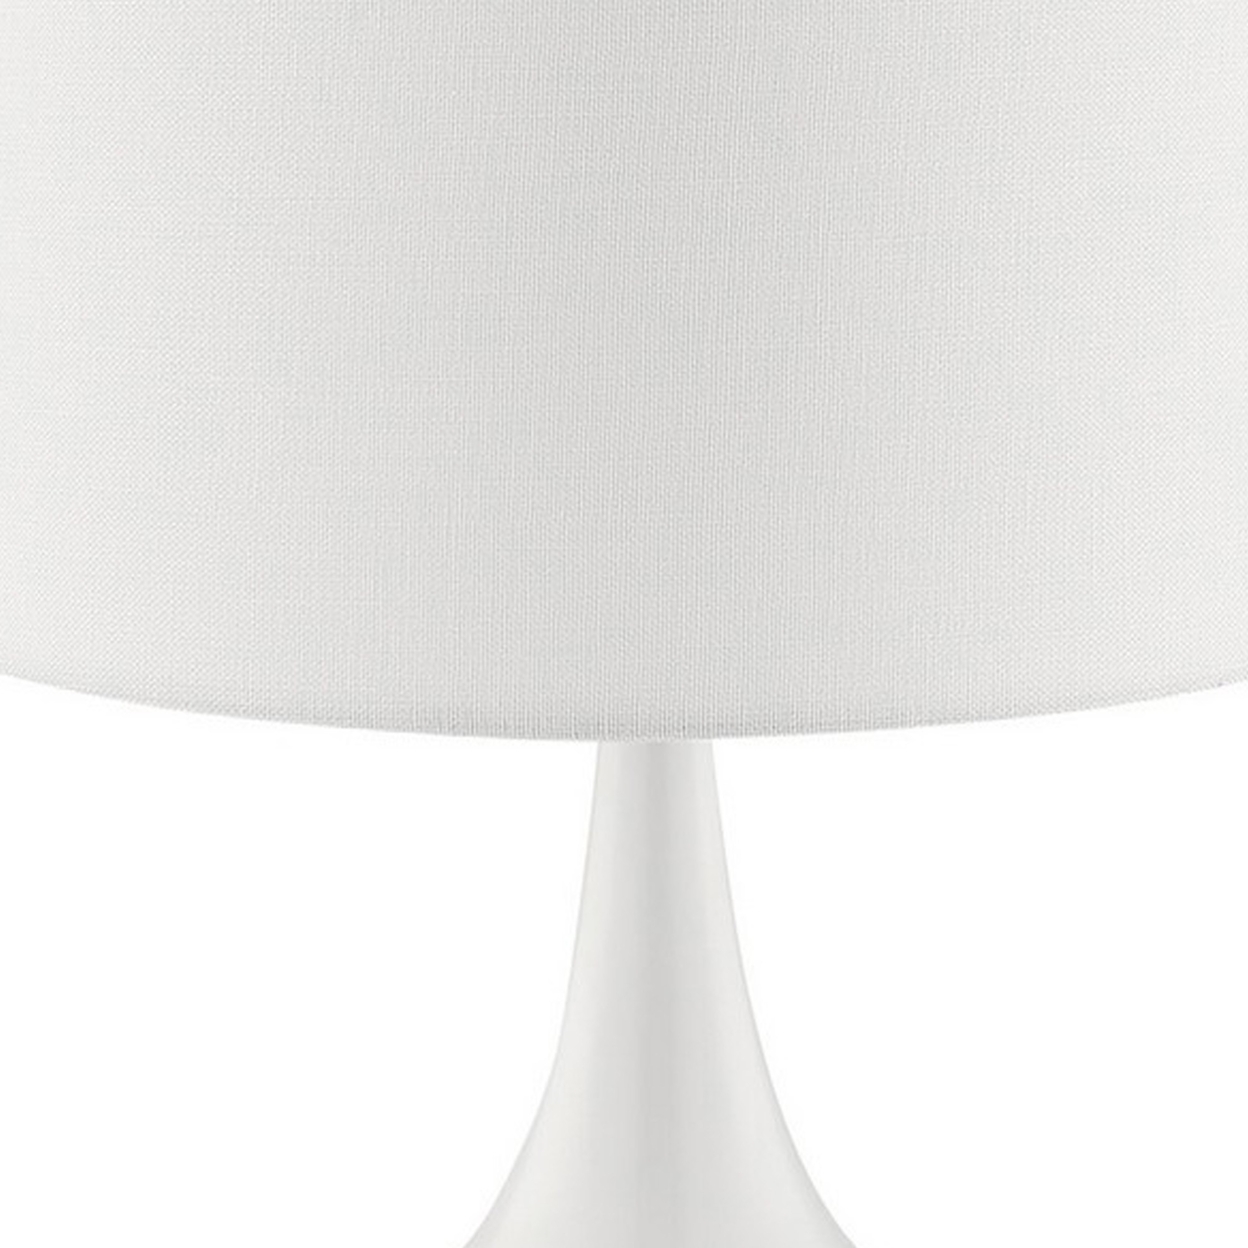 Pot Bellied Shape Metal Table Lamp With 3 Way Switch, White- Saltoro Sherpi